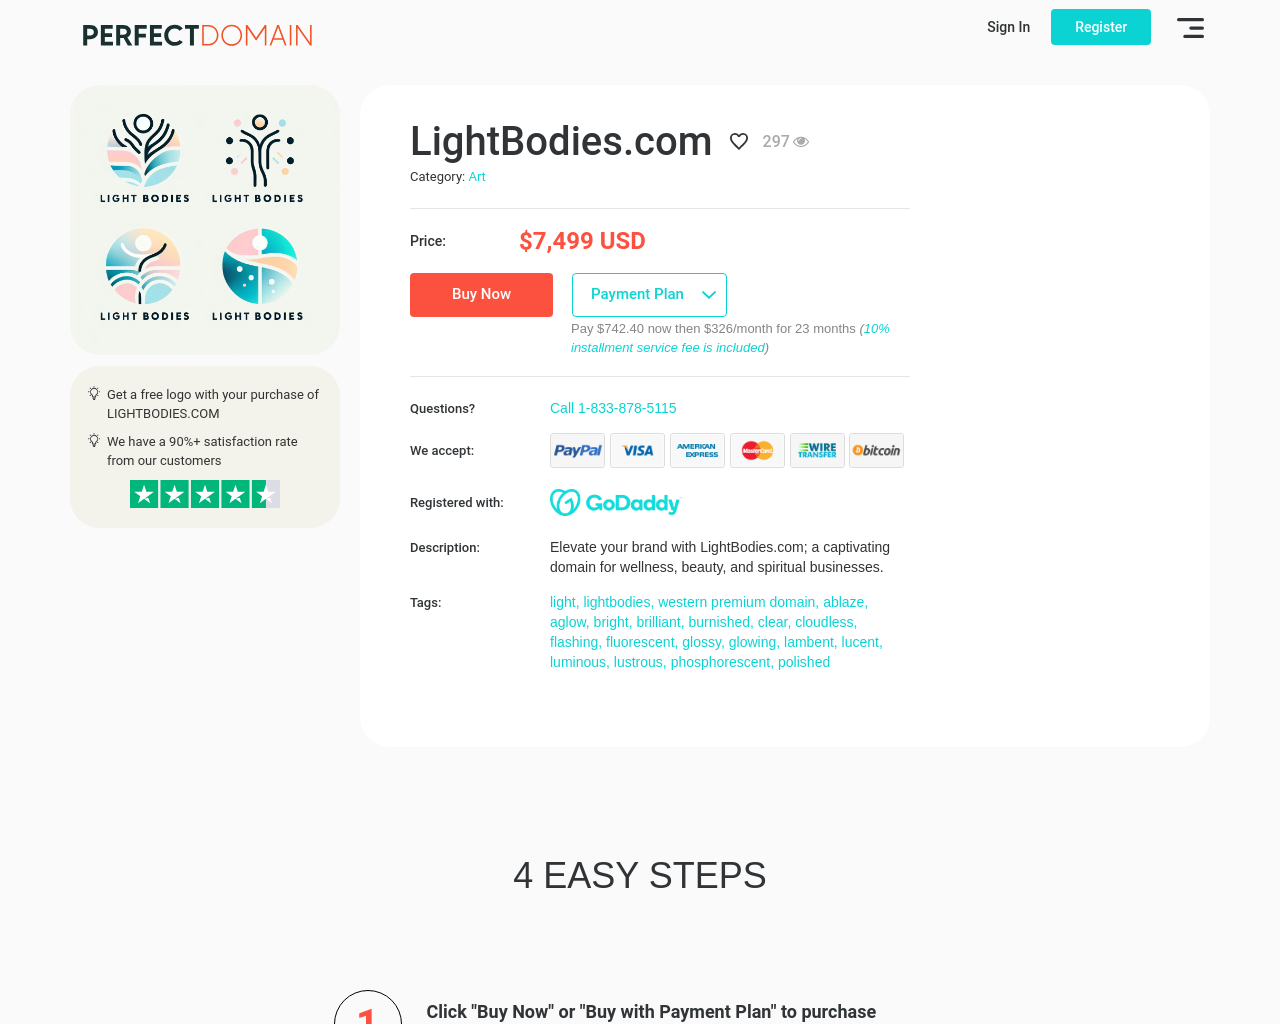 lightbodies.com